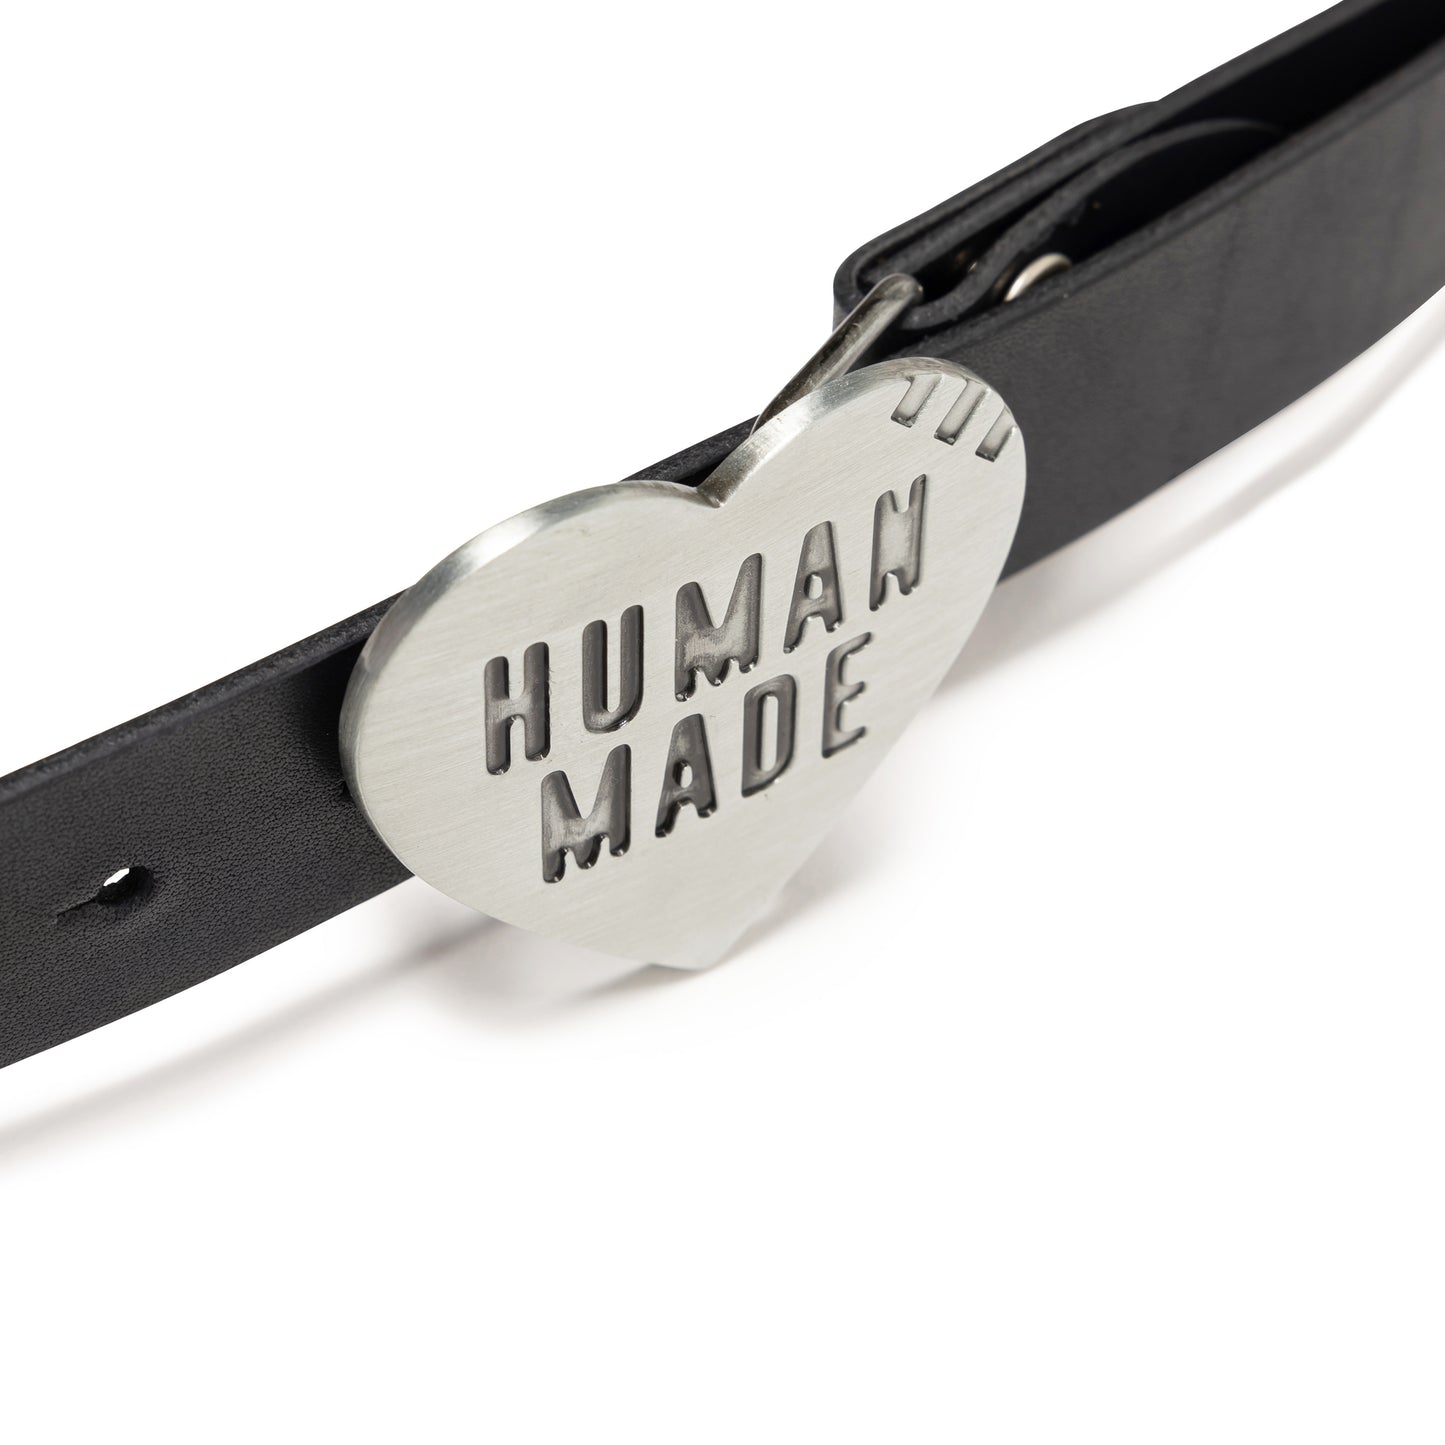 HUMAN MADE Leather Belt \